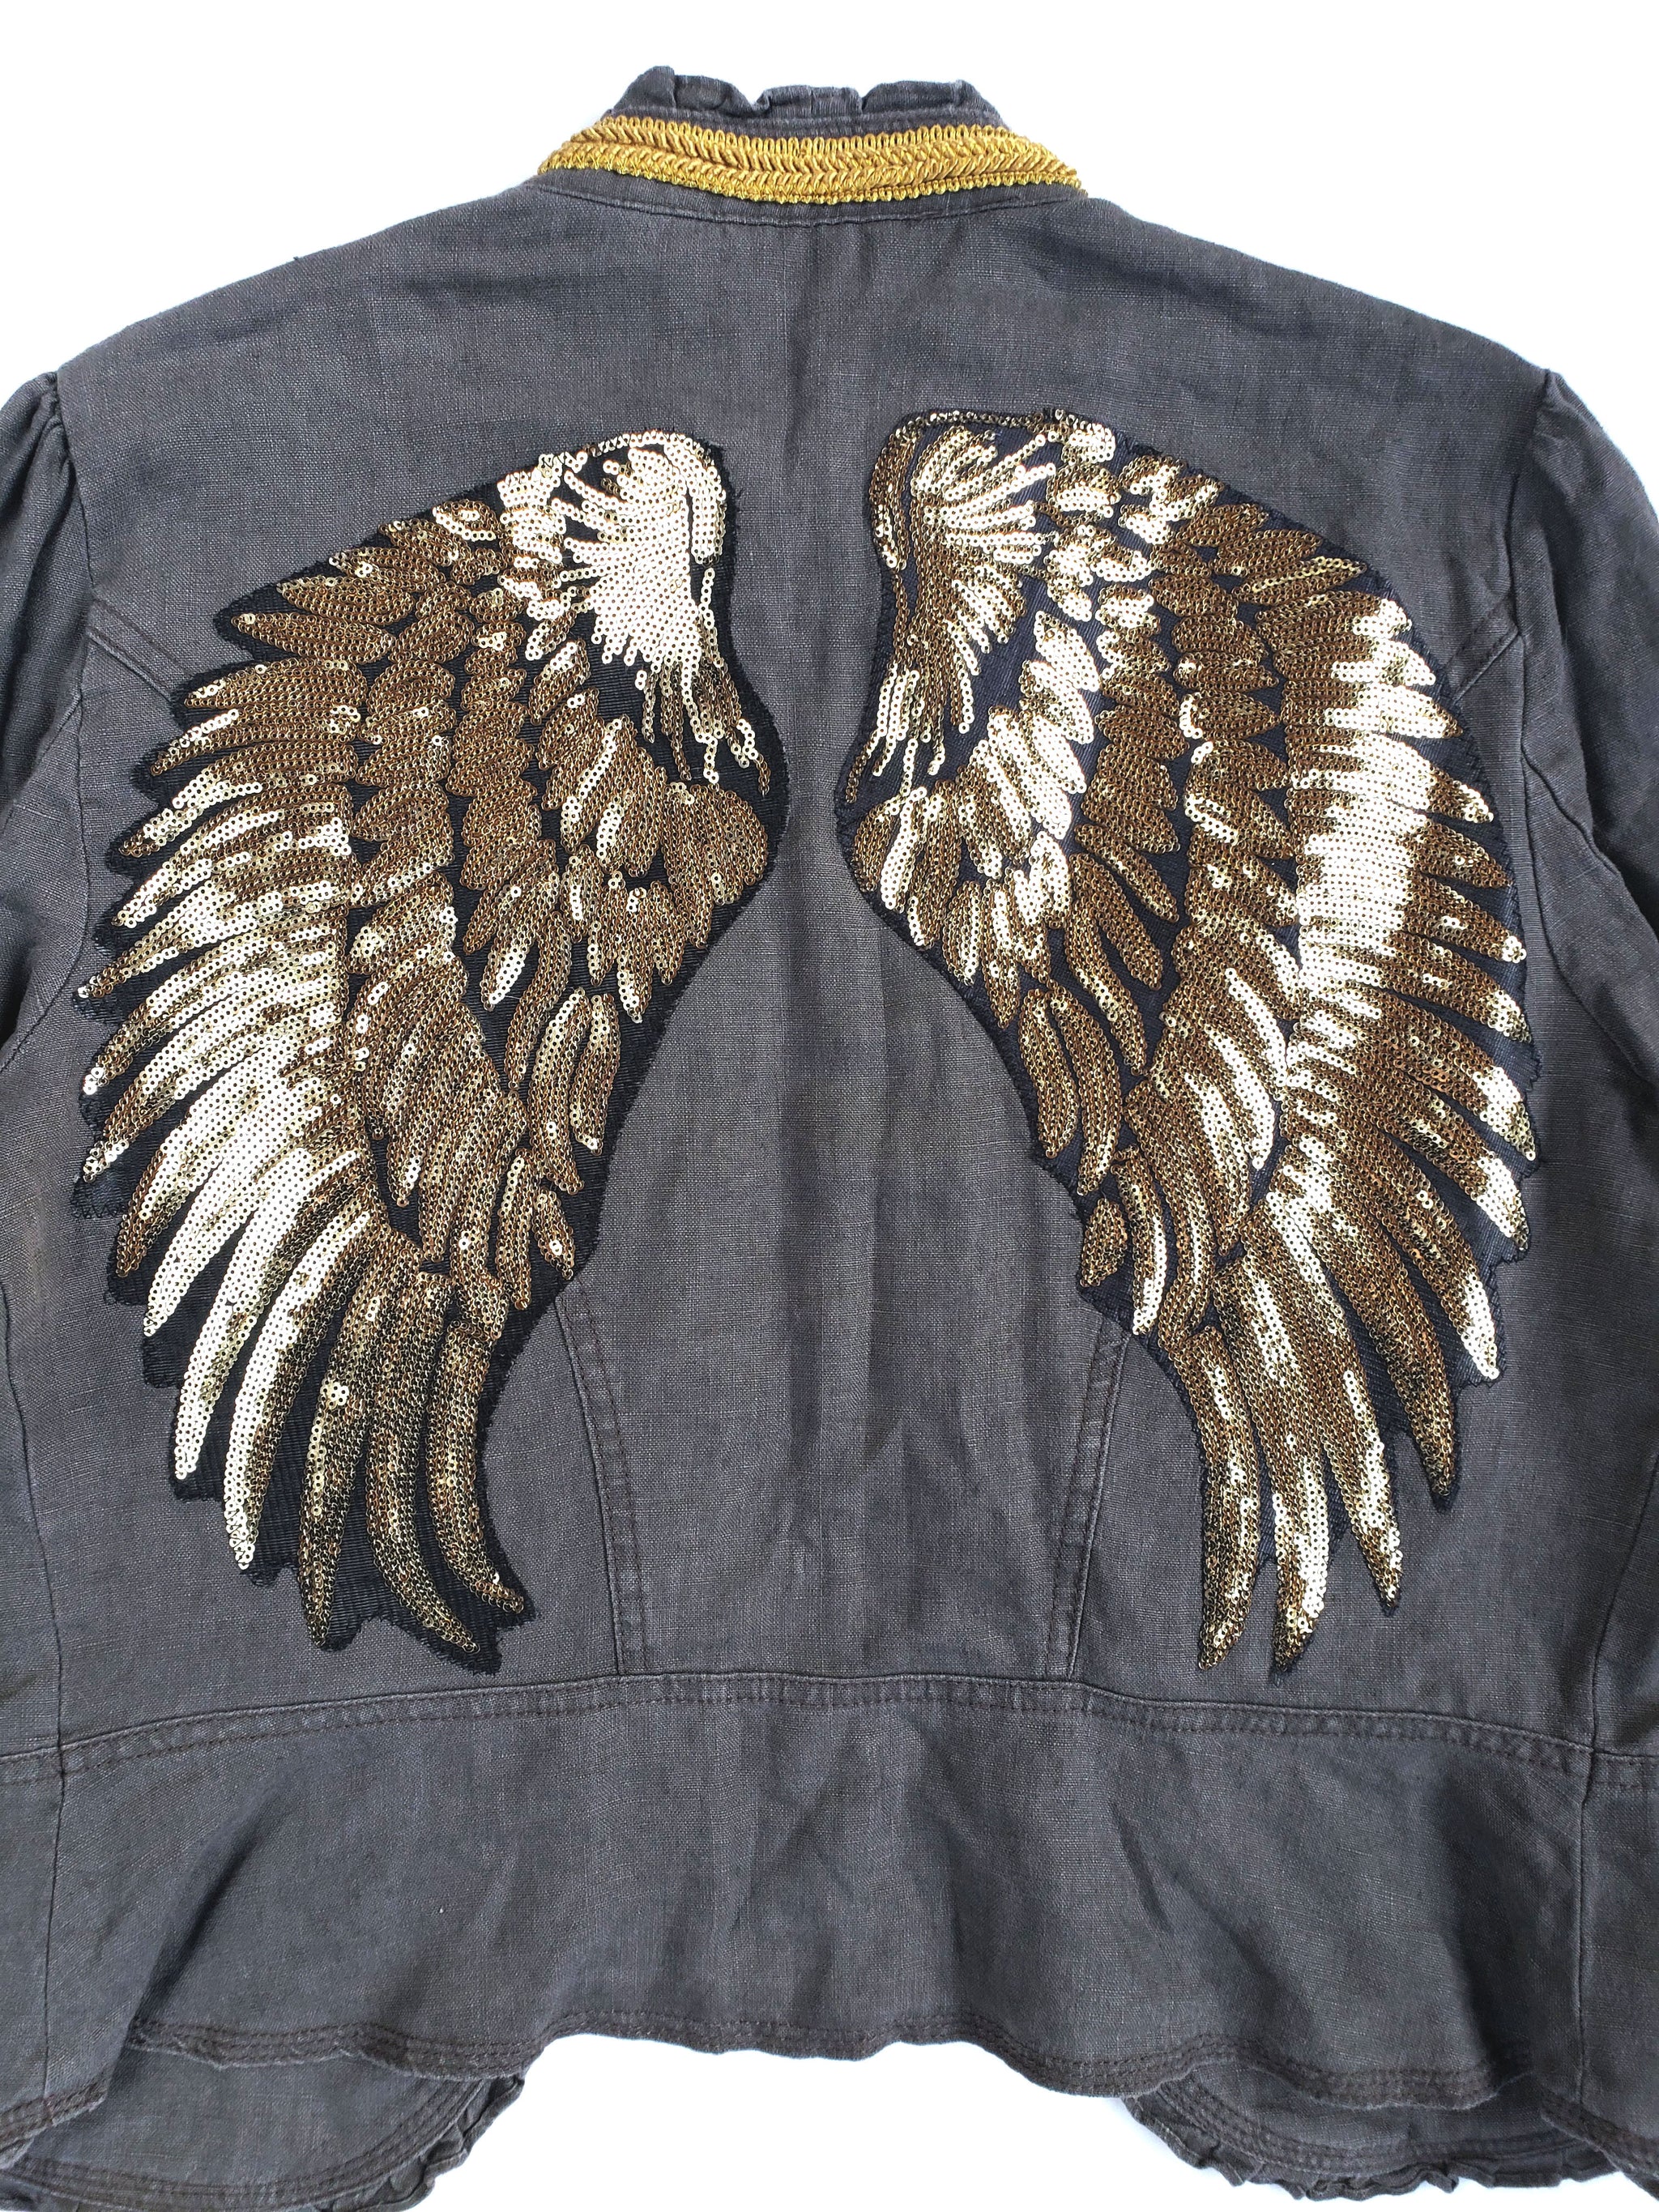 #thejacketproject - Vintage Military Style Rocker Jacket #3